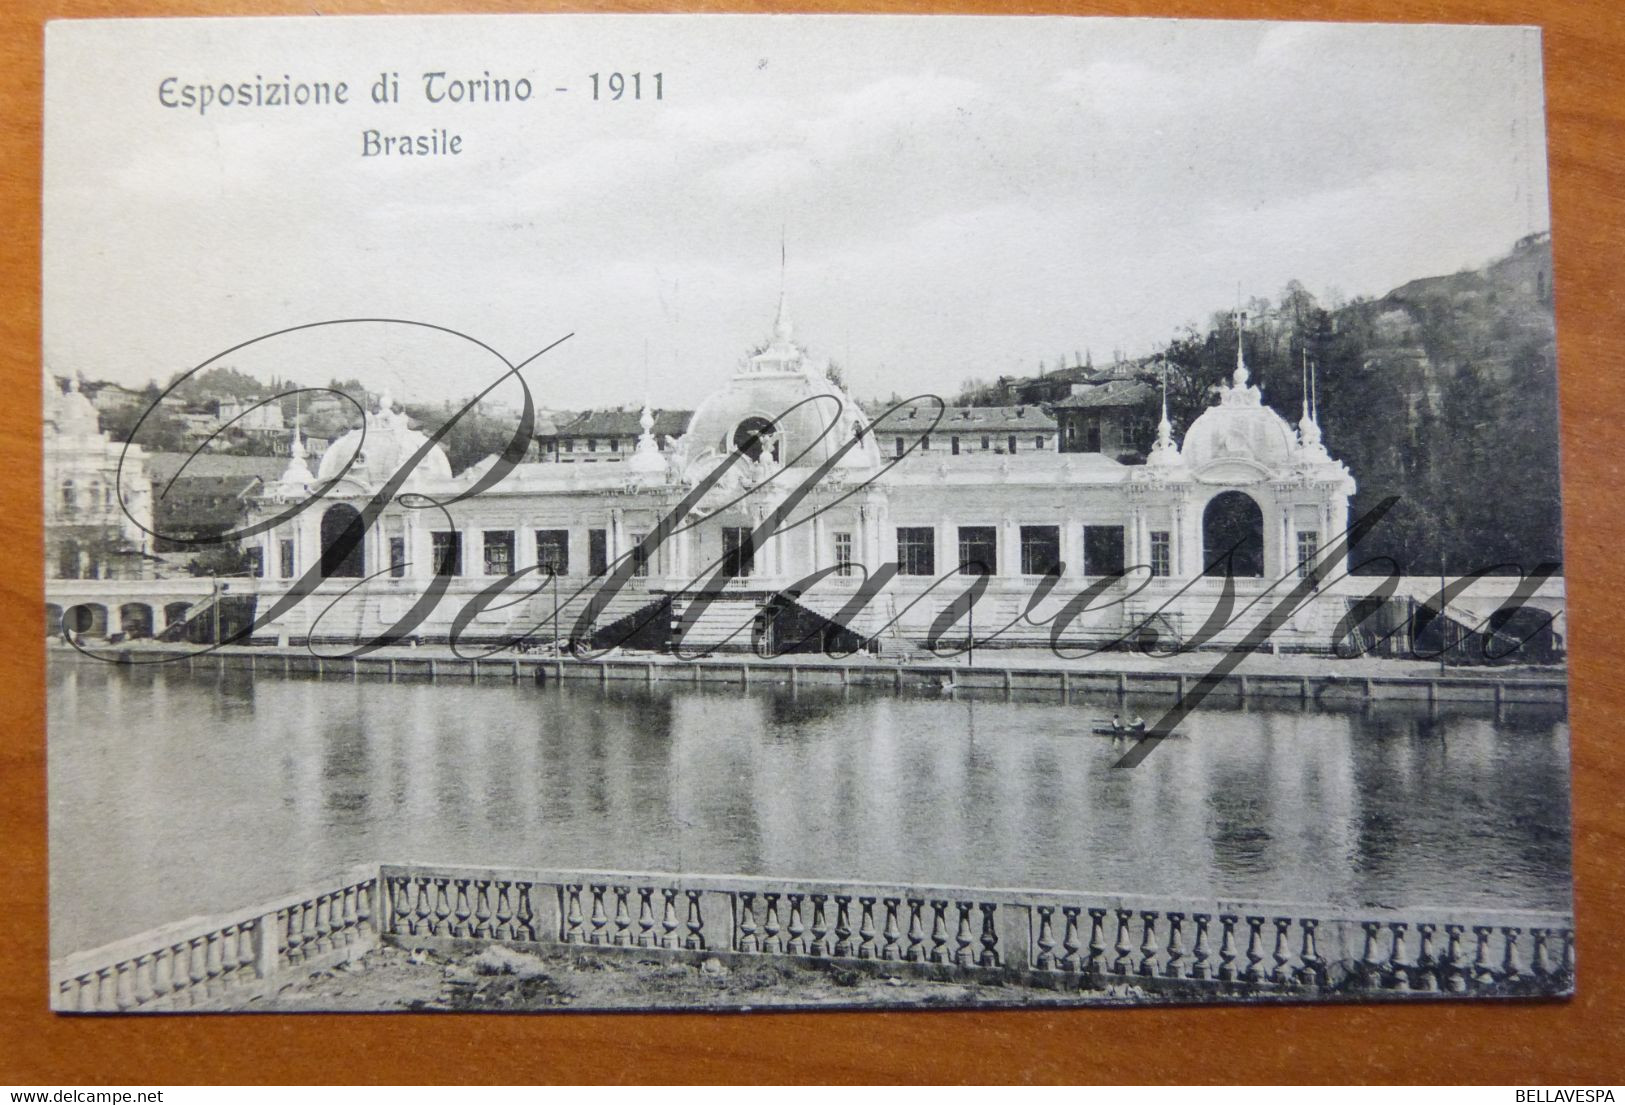 Torino. Espositione Exposition. 1911 Bresil Brasile. N° 13274 - Expositions